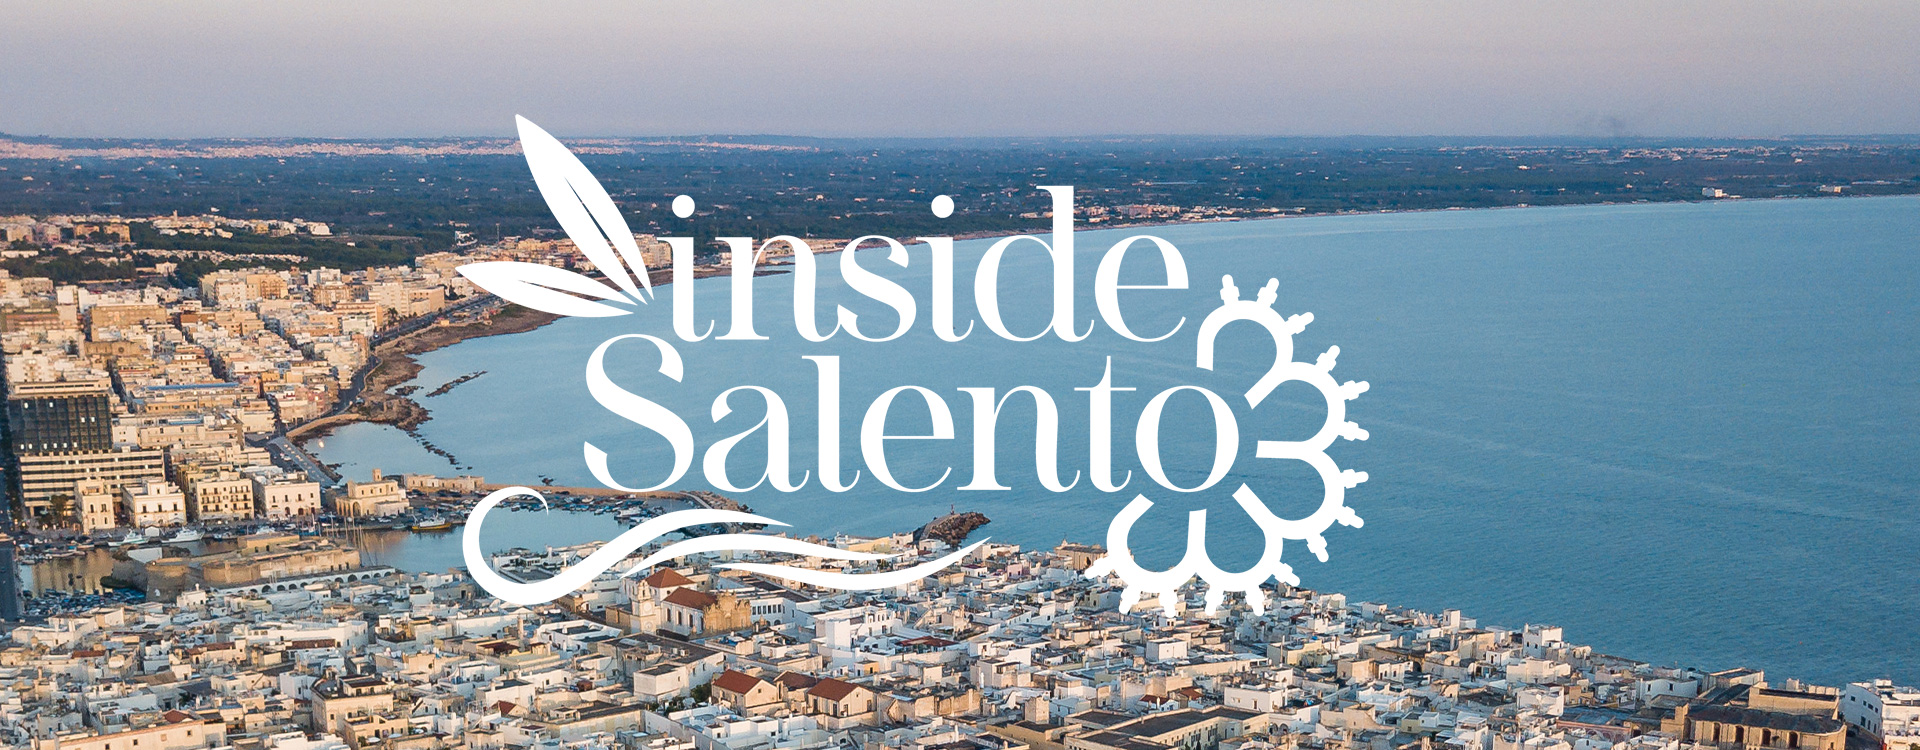 Inside Salento – logo by OTQ